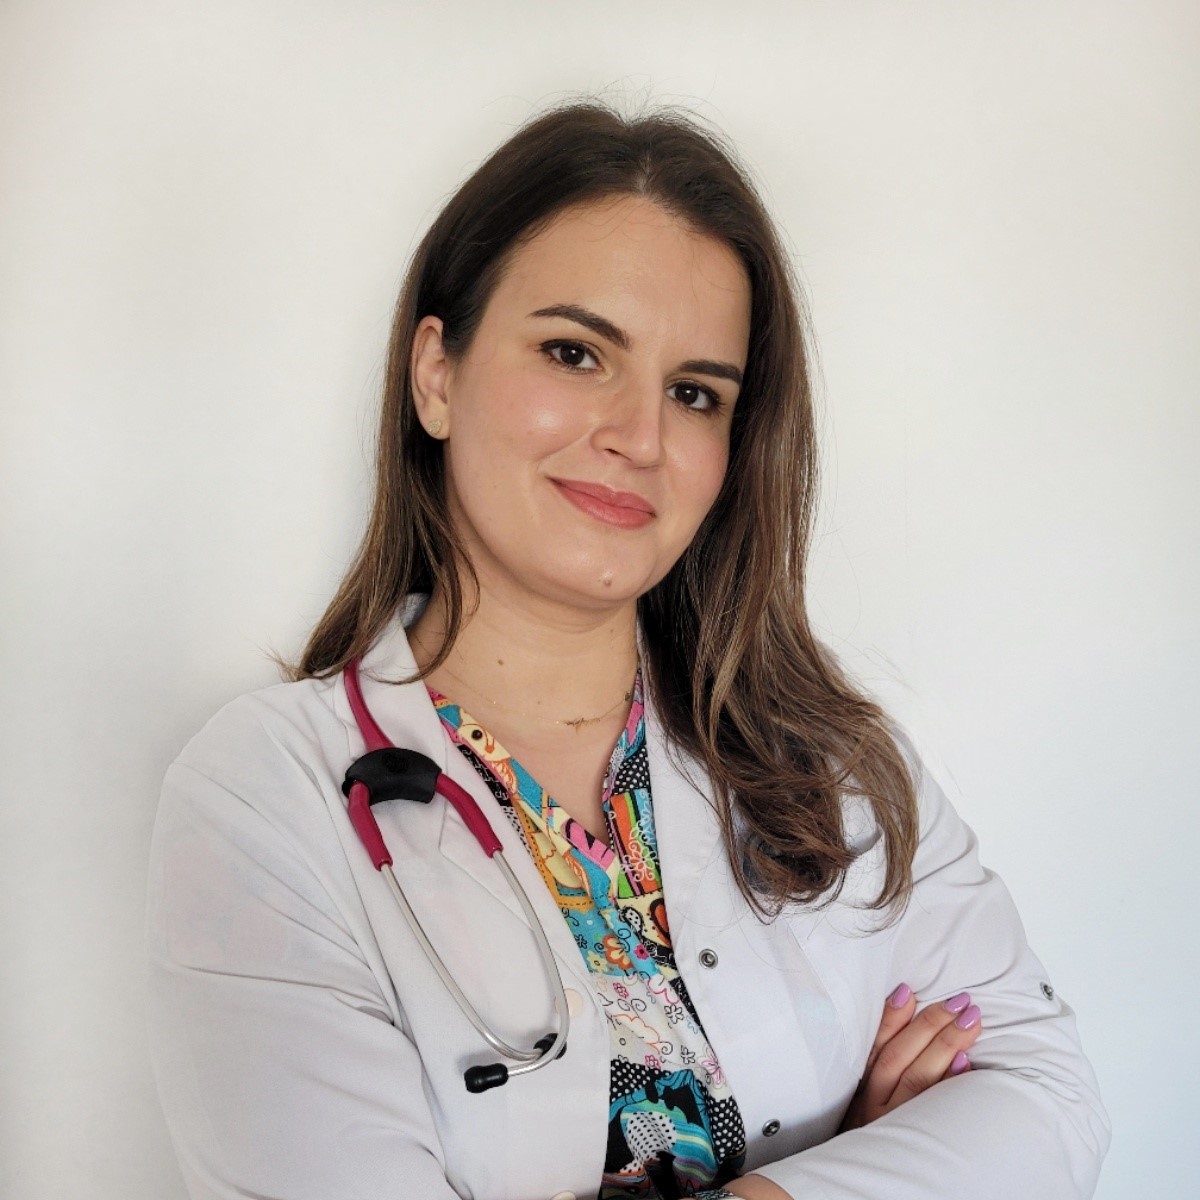 Dr. Florea Sinziana